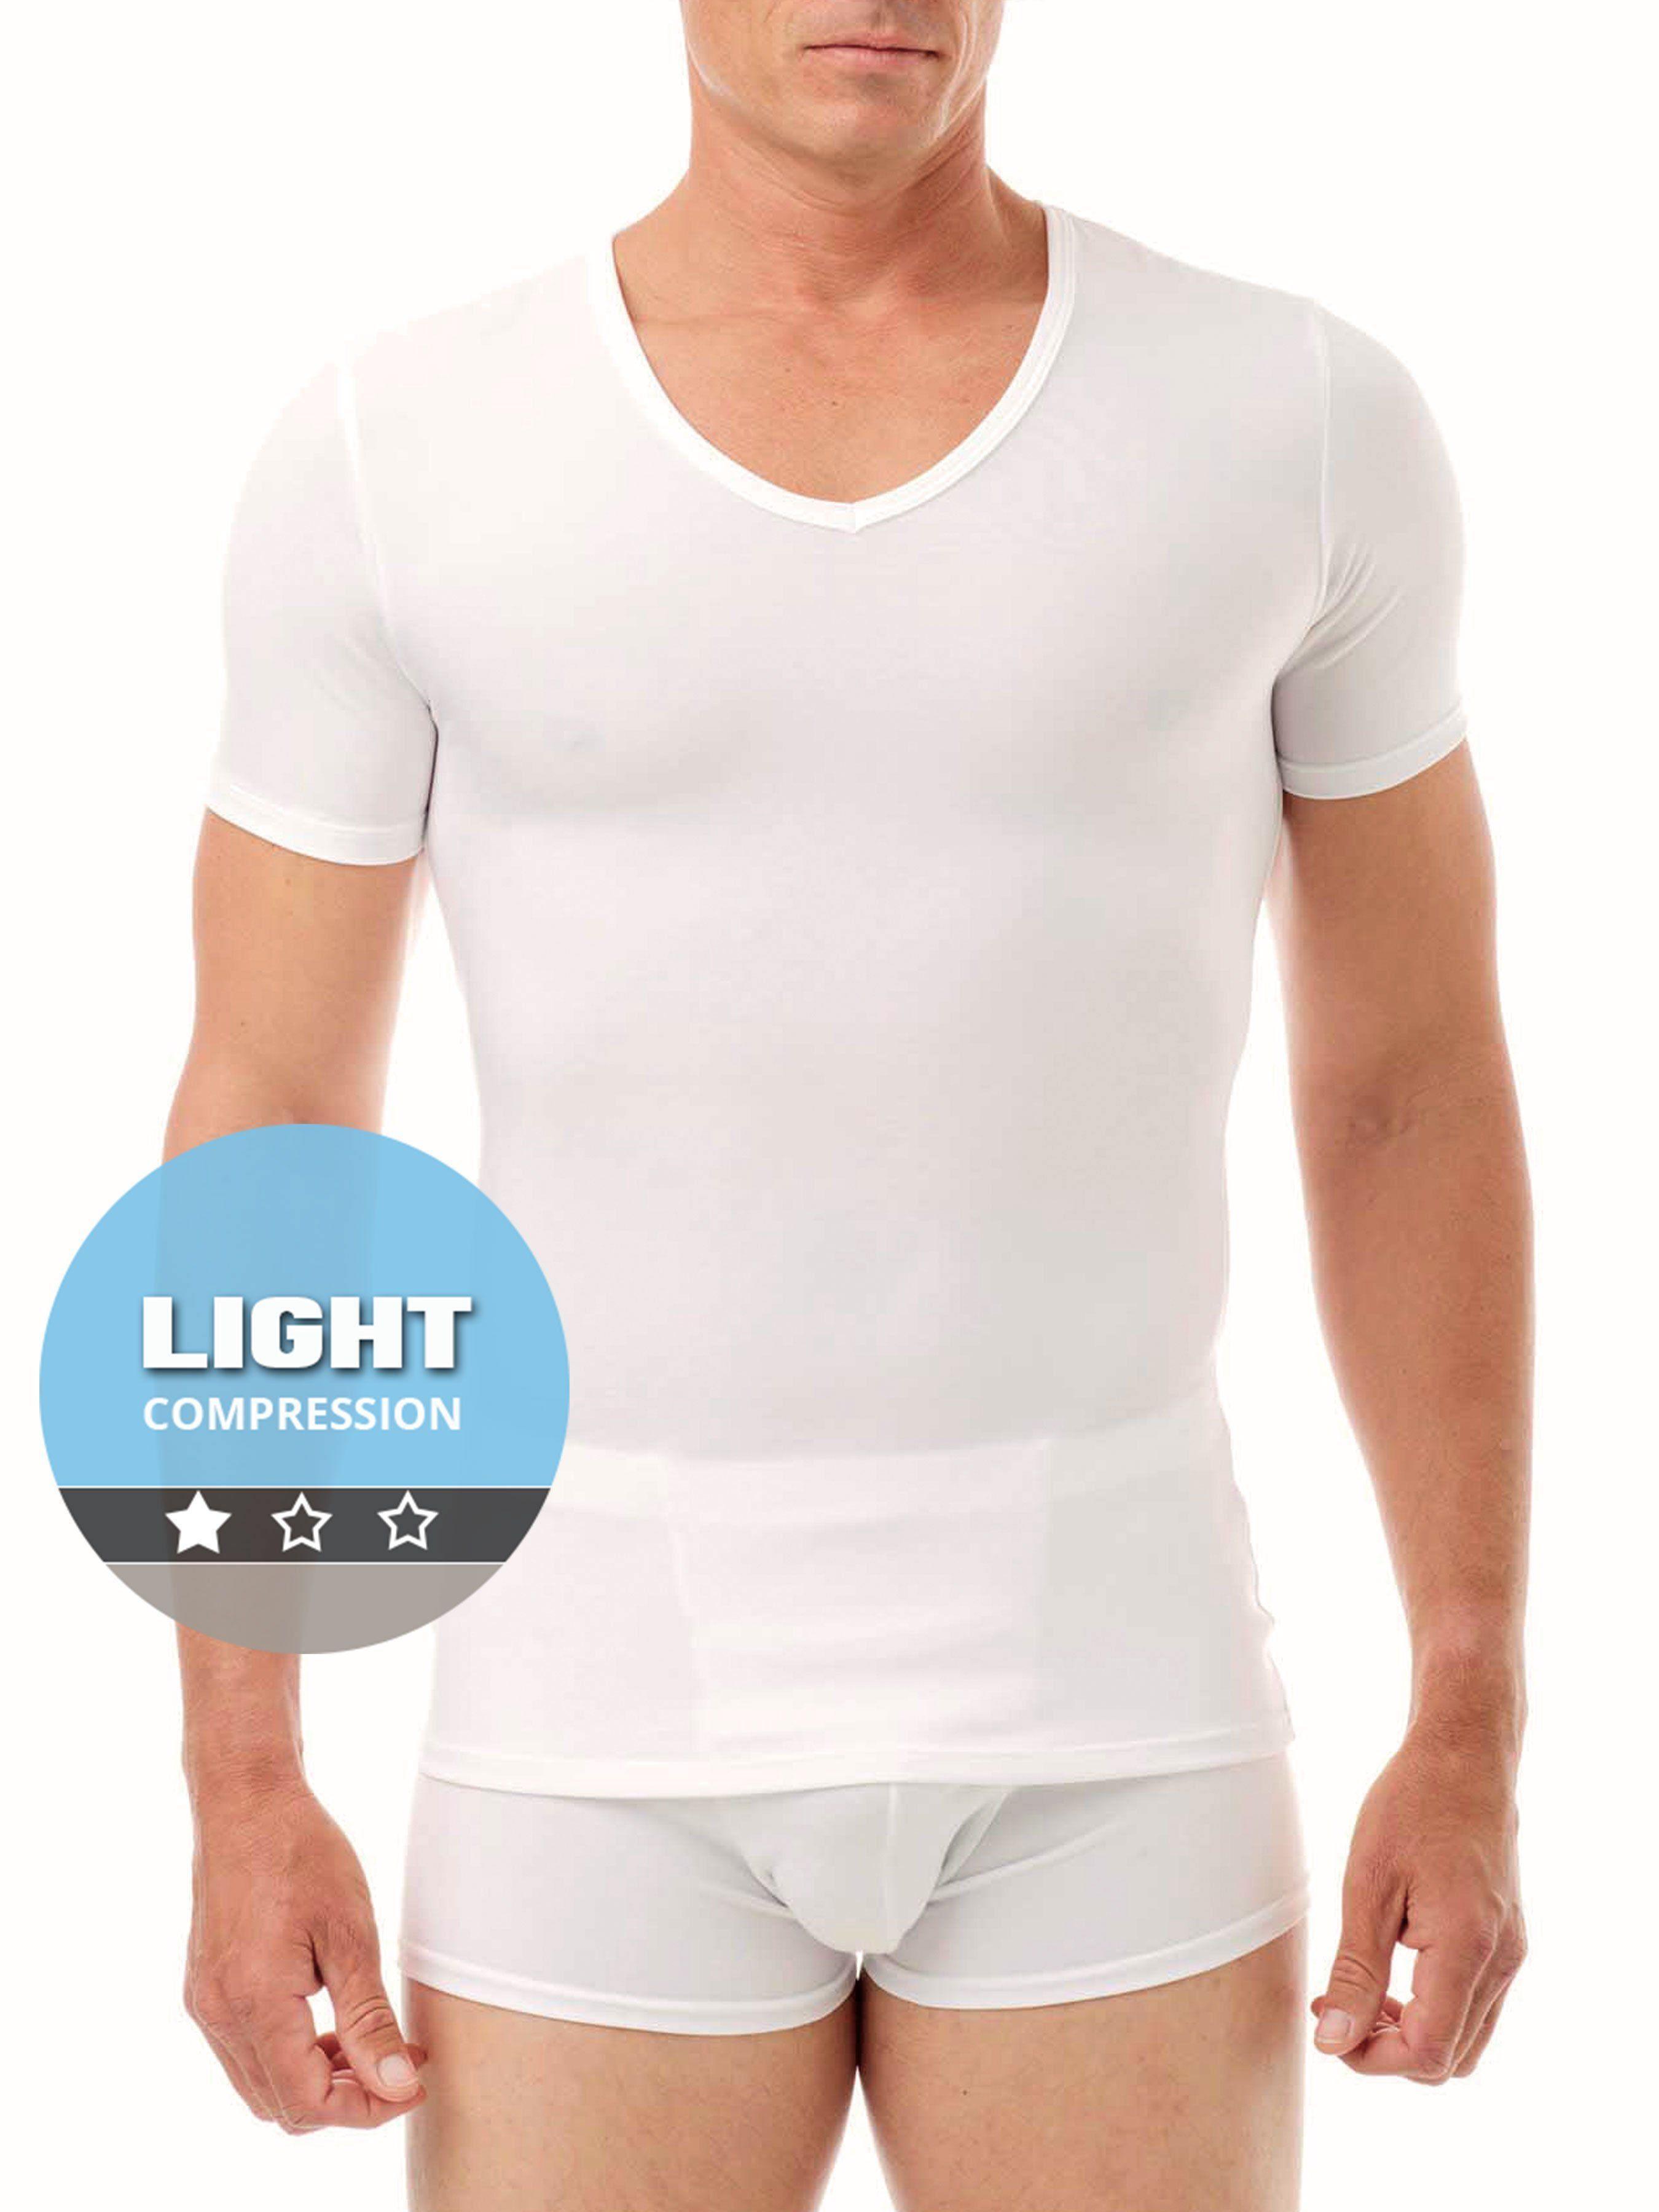 XBODY:UK Light Compression T-shirt - V-neck | SALE